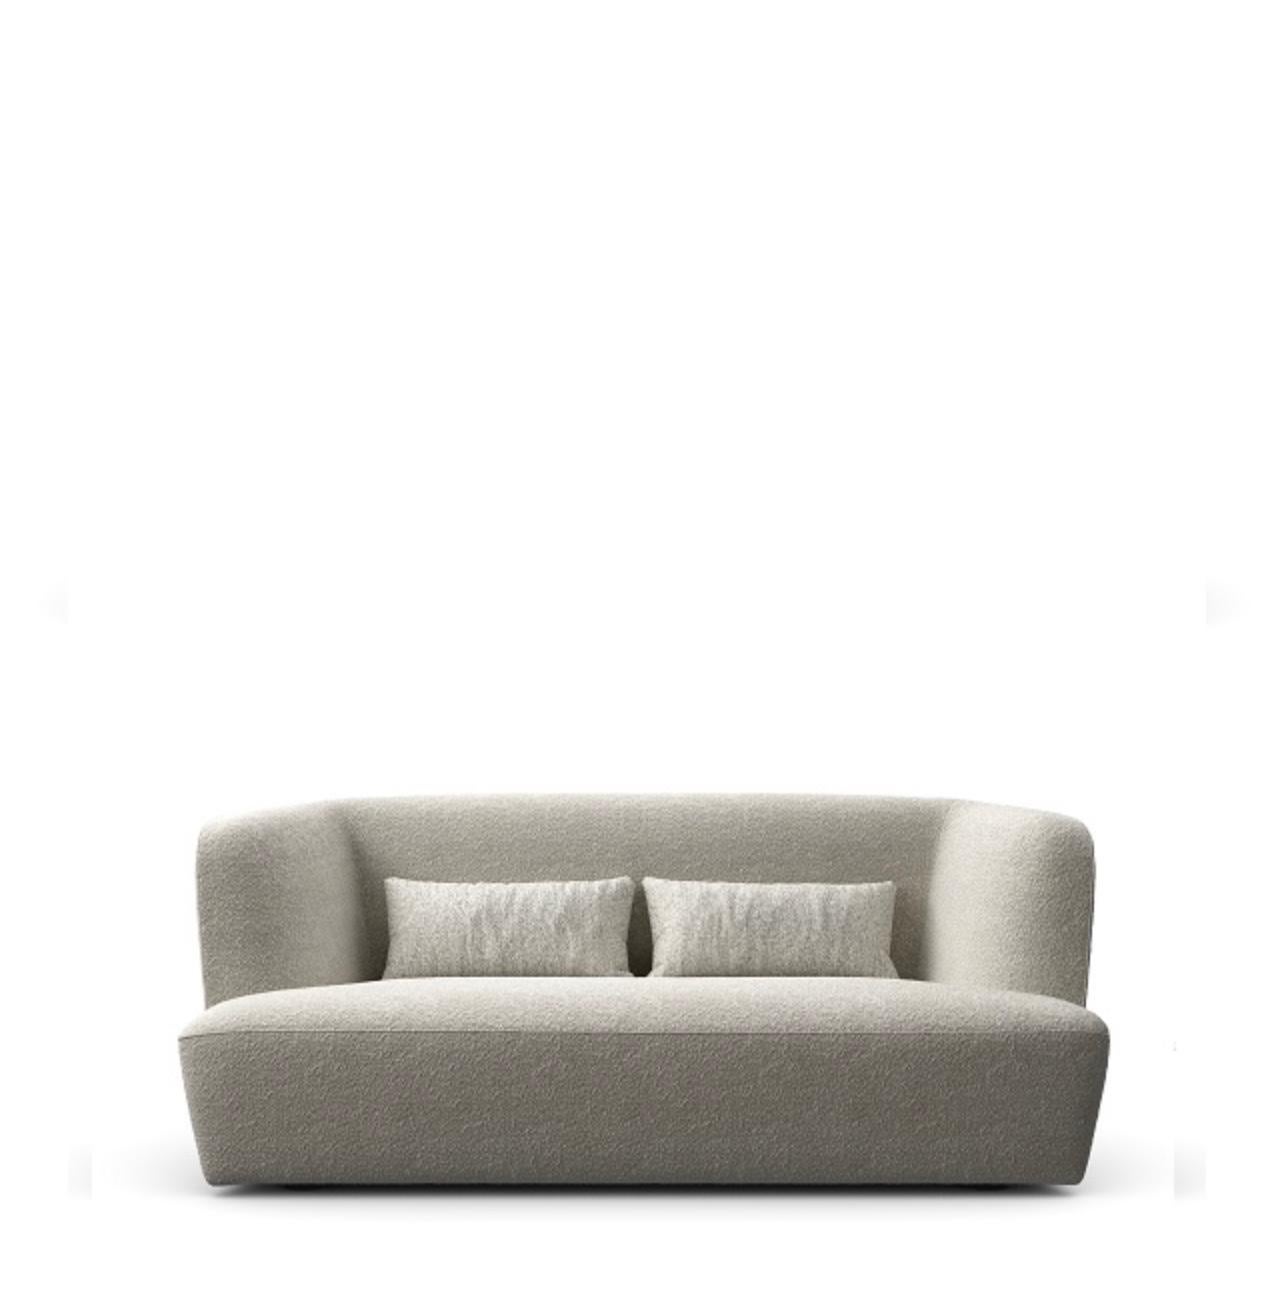 Lievore + Altherr Désile Park 'Davos' Sofa 175 for Verzelloni, Italy For Sale 4